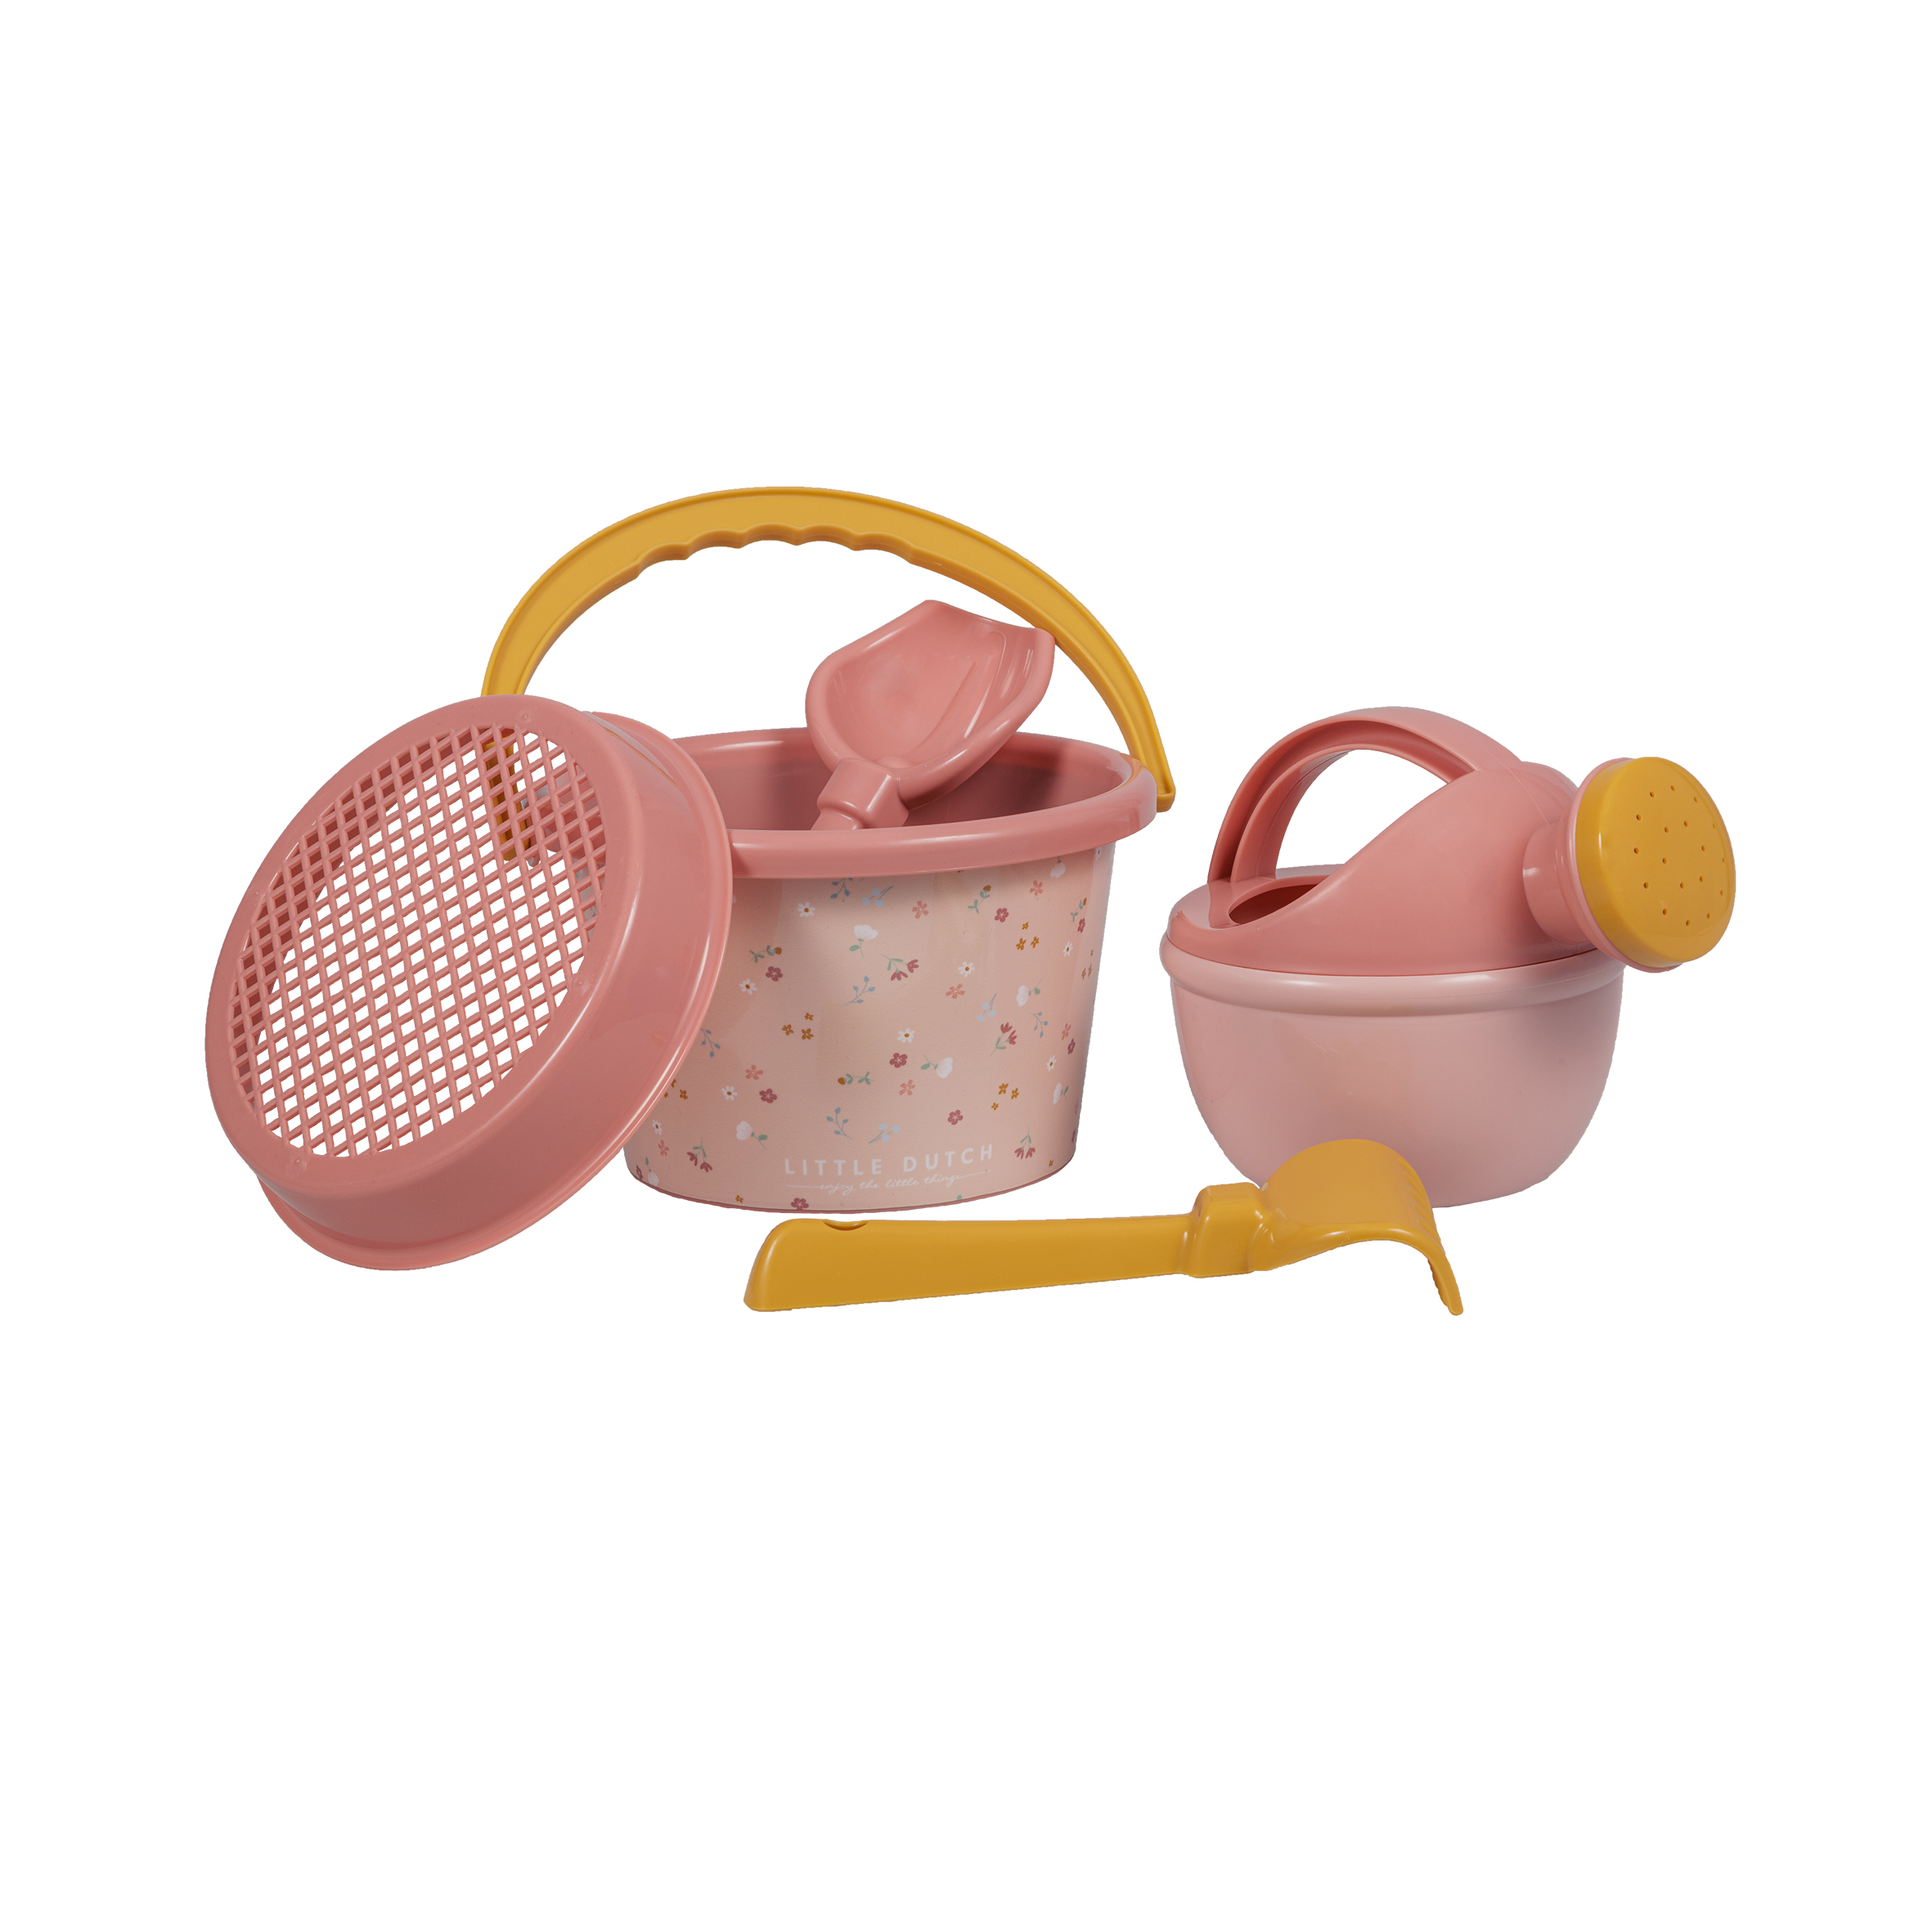 Sandspielzeug Eimer Set 5-teilig Little pink Flowers rosa